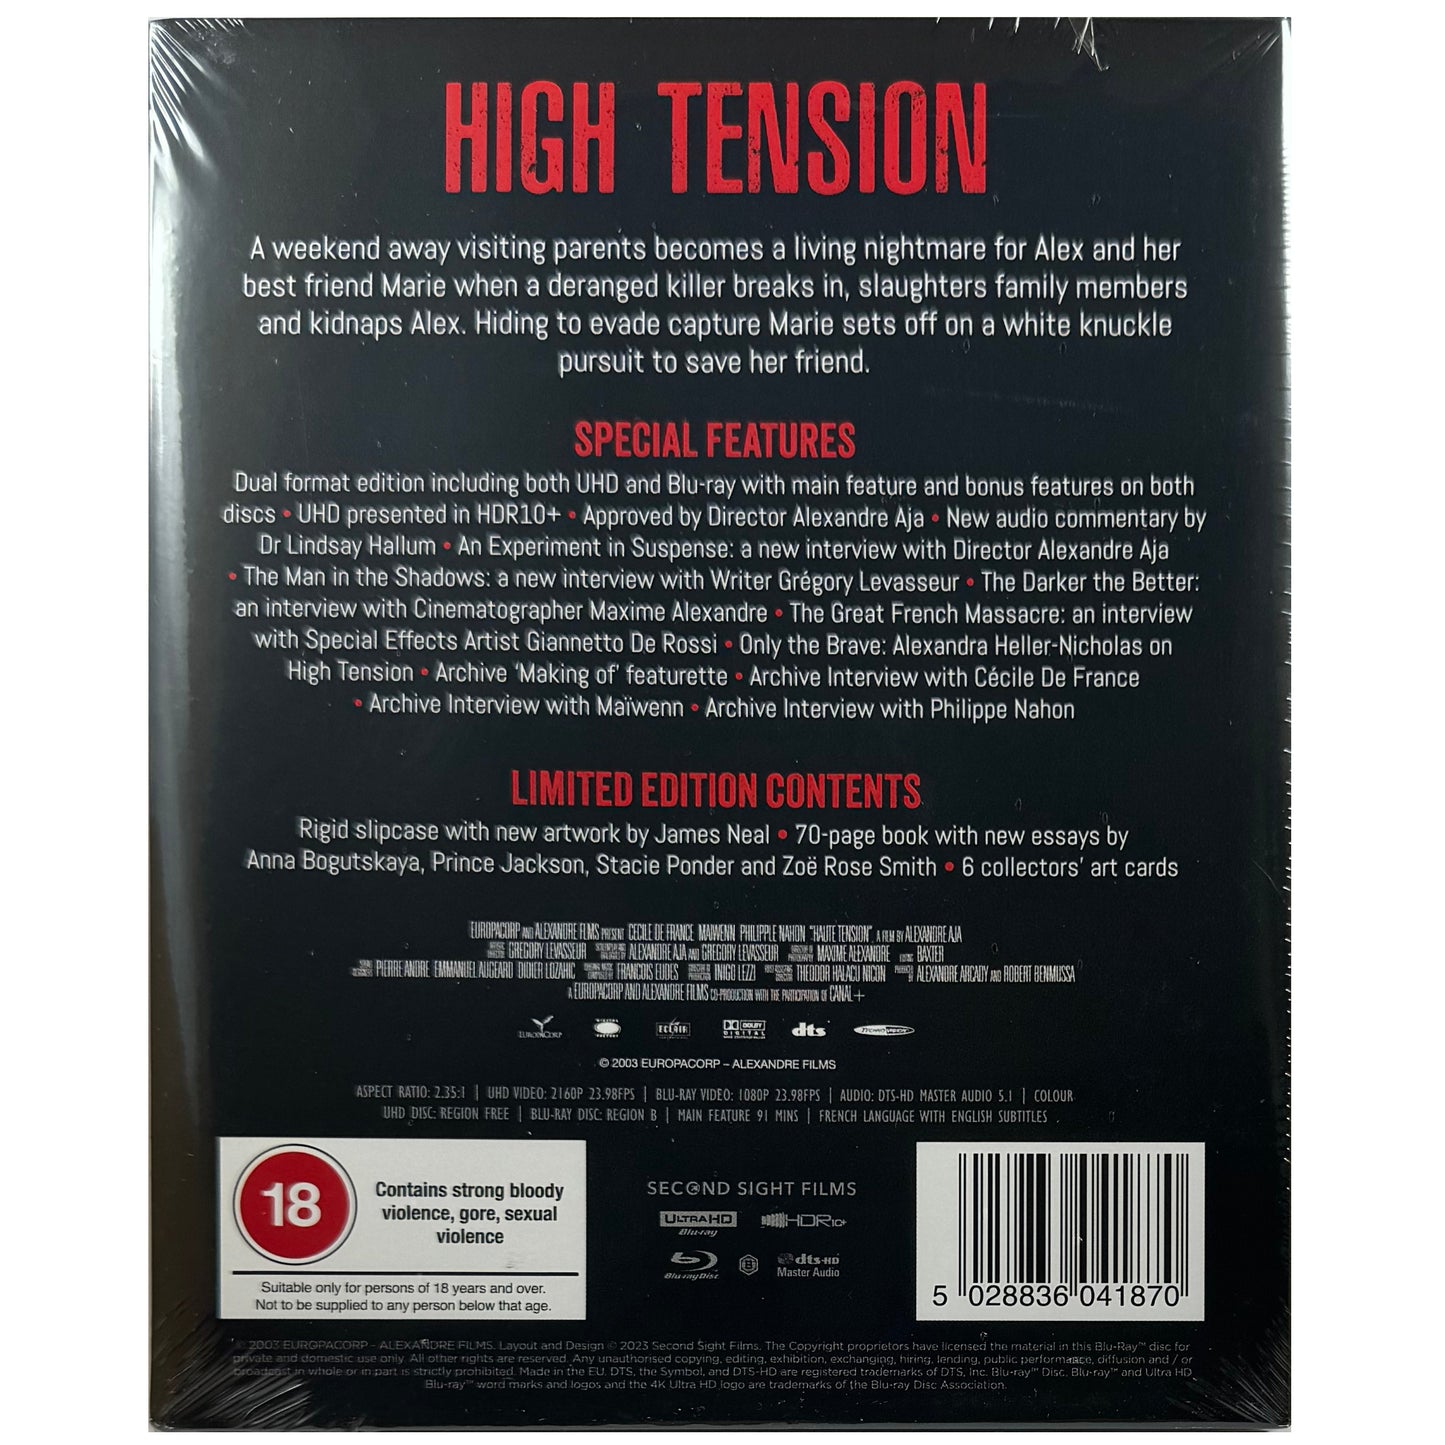 High Tension 4K UltraHD Blu-Ray - Limited Edition